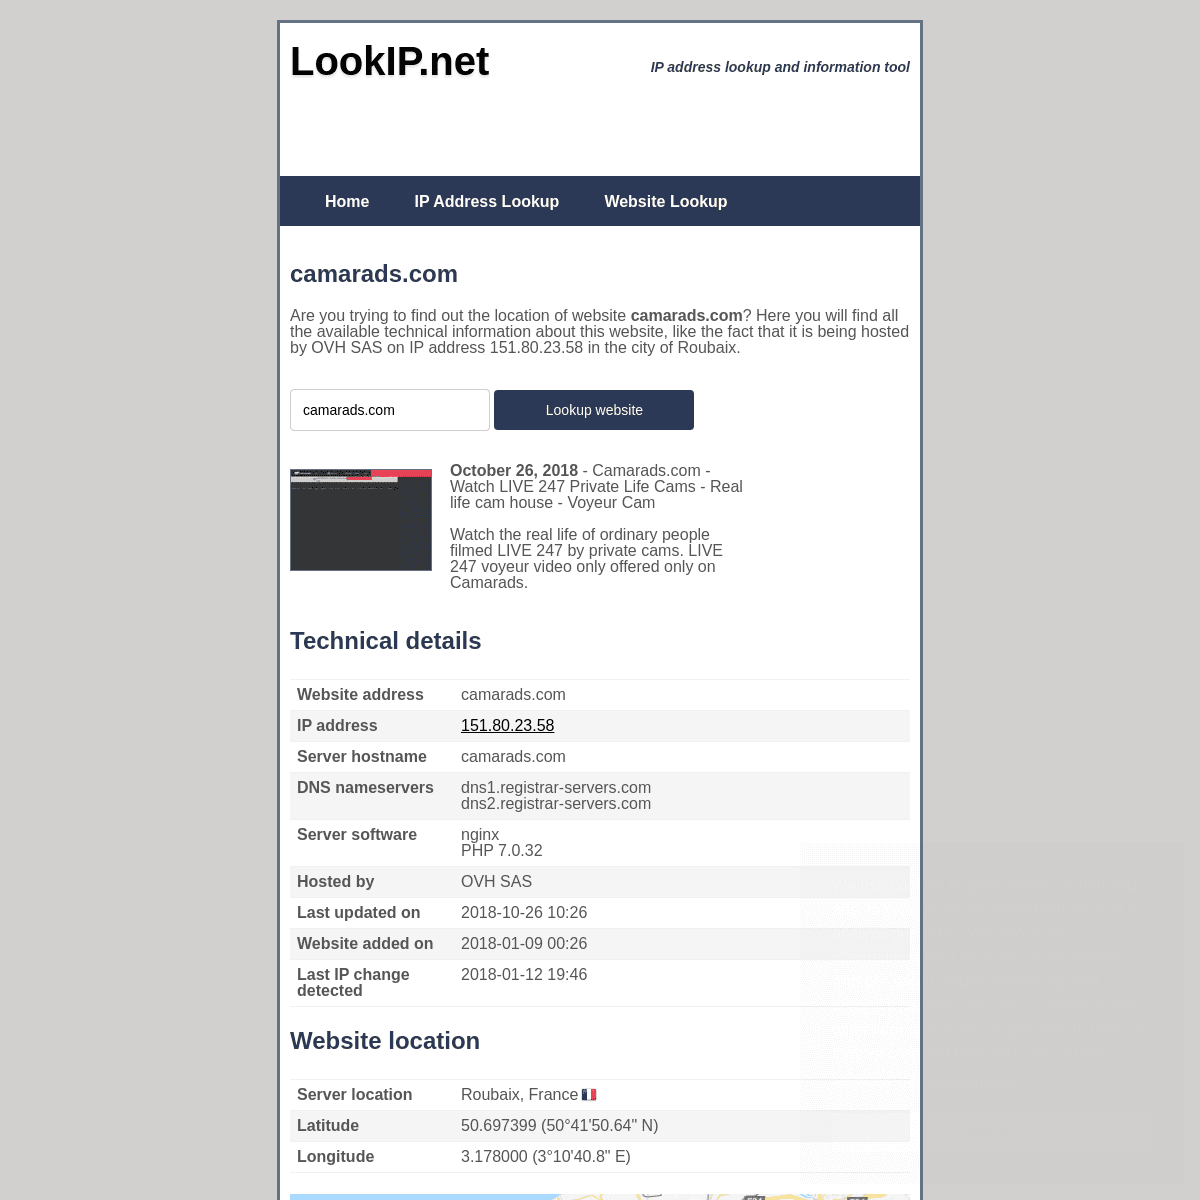 A complete backup of https://www.lookip.net/website/camarads.com